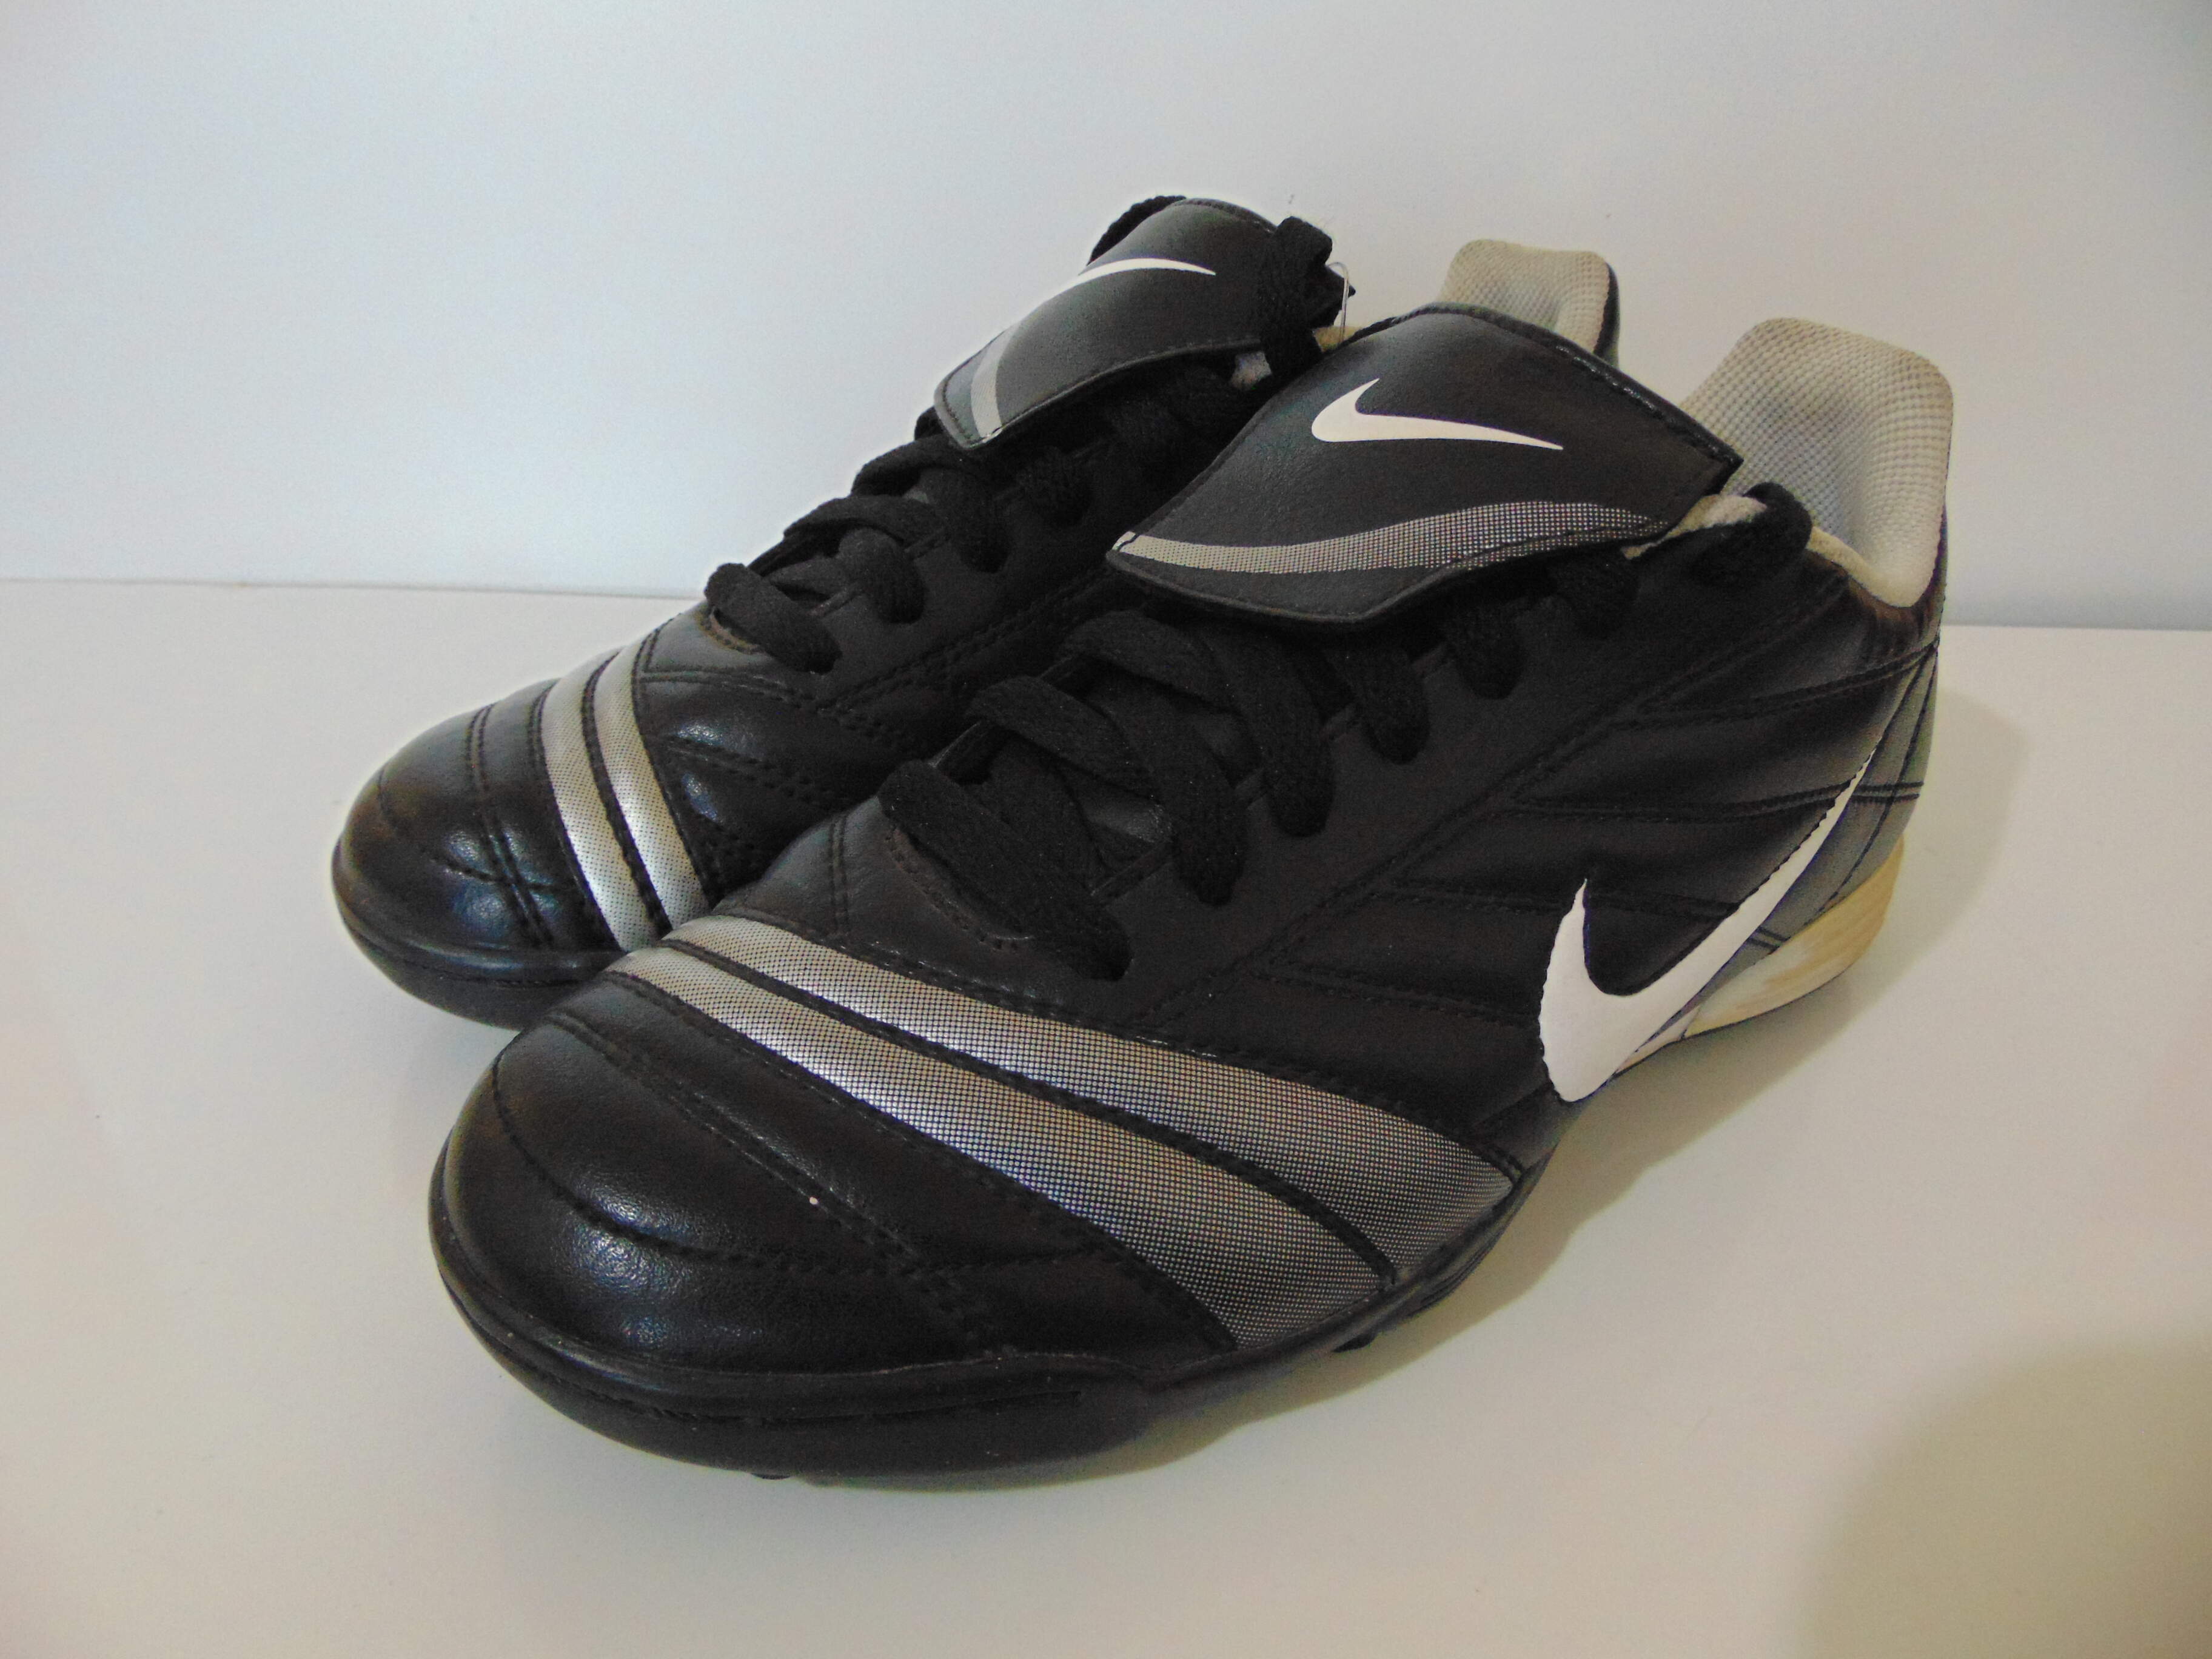 Nike Premier TF Junior Football Boot 316746.011 UK 5.5 EX Shop £ 10.00